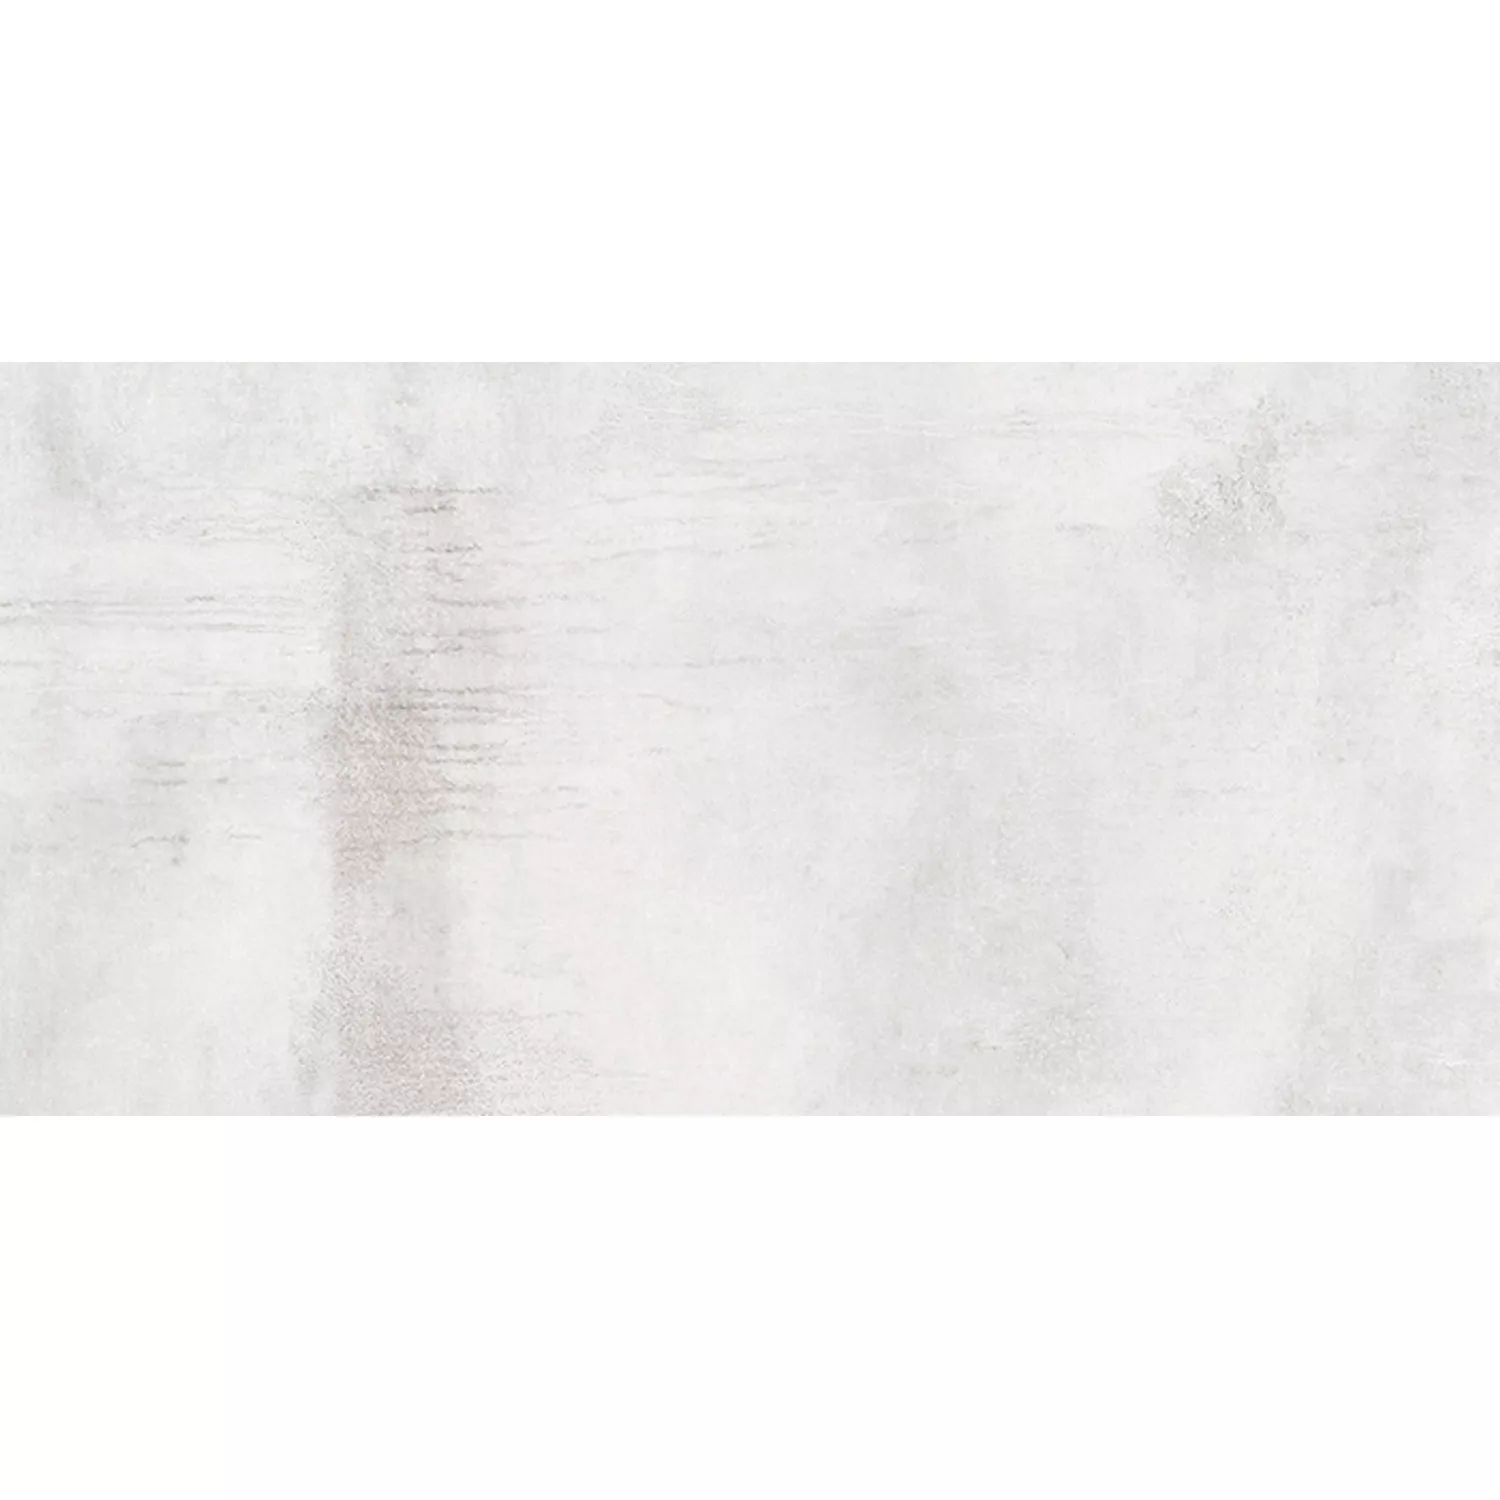 Gresie Tycoon Aspect de Beton R10 Argint 30x60cm